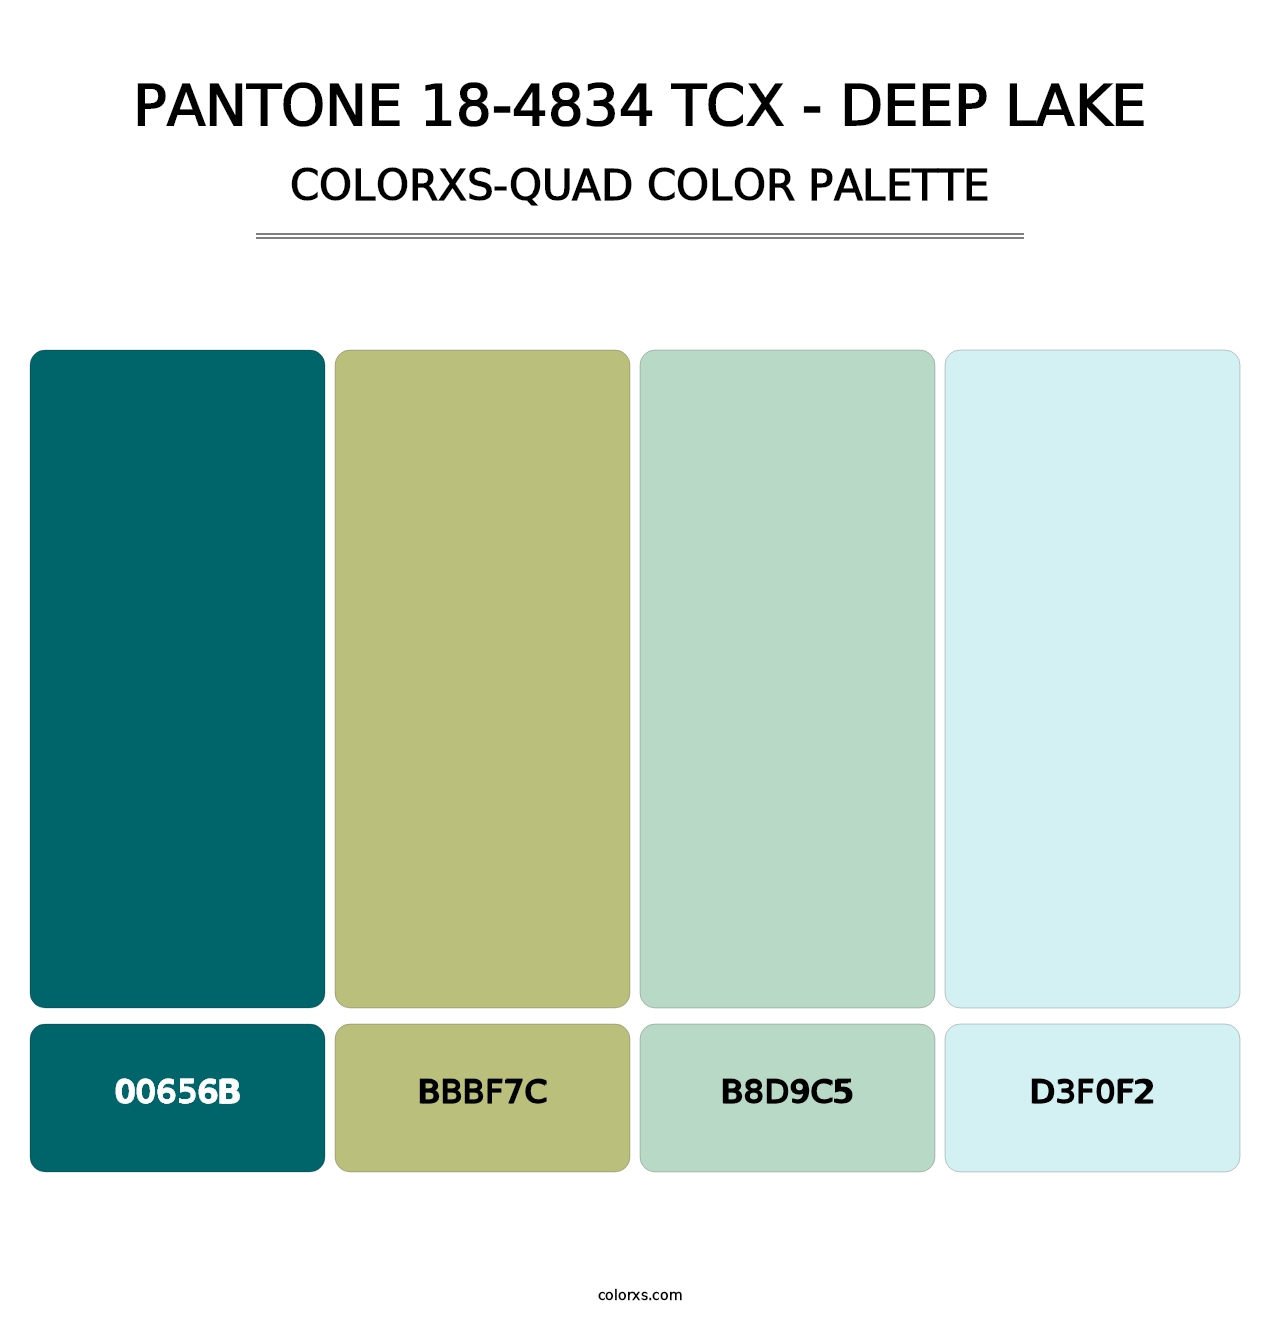 PANTONE 18-4834 TCX - Deep Lake - Colorxs Quad Palette